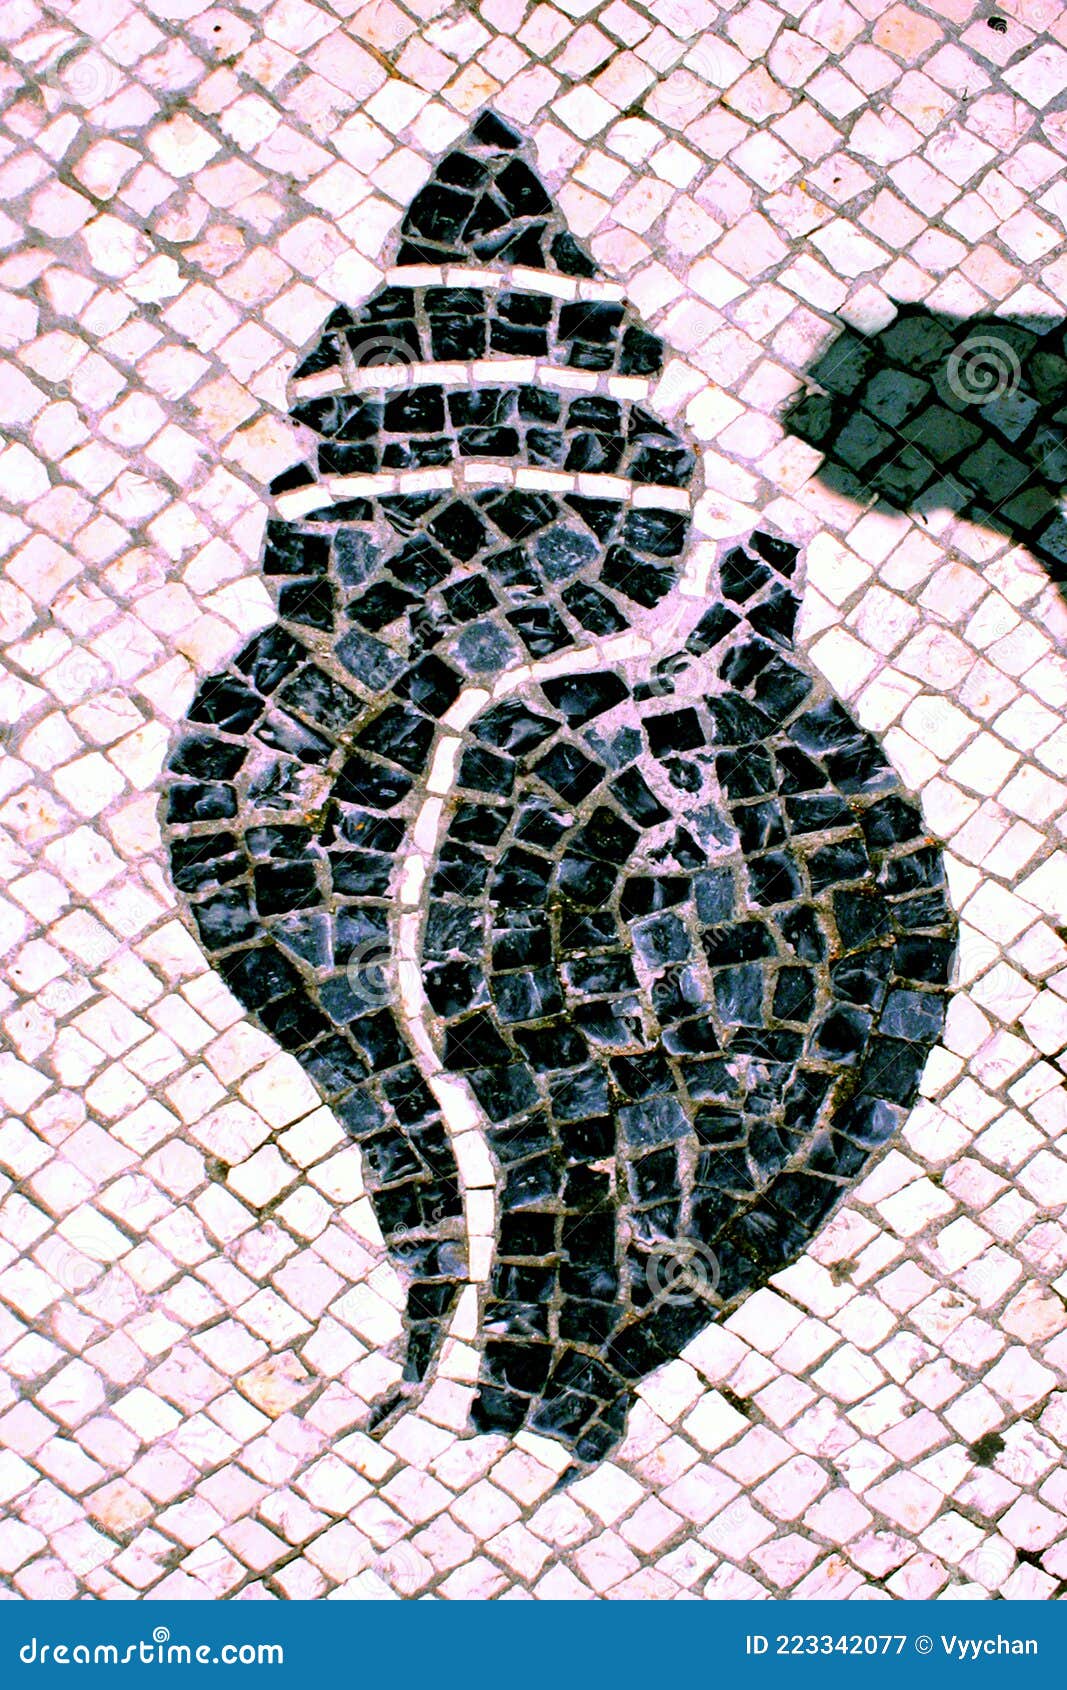 portuguese macau mosaic arts craftsmanship marine life shellfish macao mosaico cobblestone street cultural heritage architecture